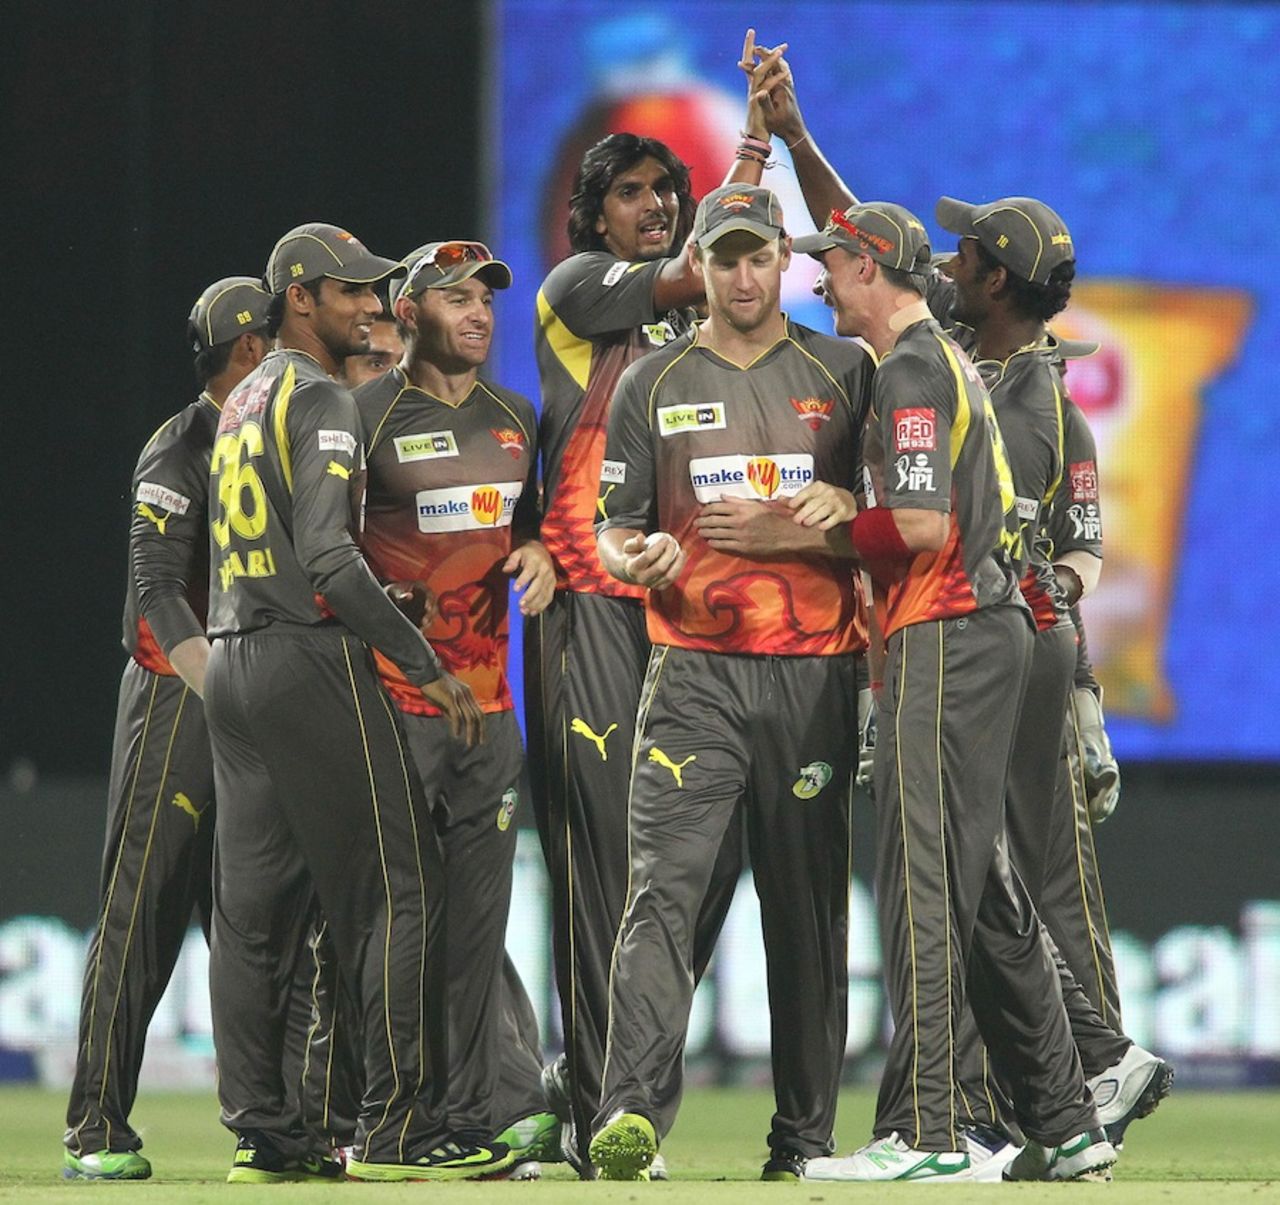 Ishant Sharma shares high-fives after picking up a wicket, Delhi Daredevils v Sunrisers Hyderabad, IPL, Delhi, April 12, 2013